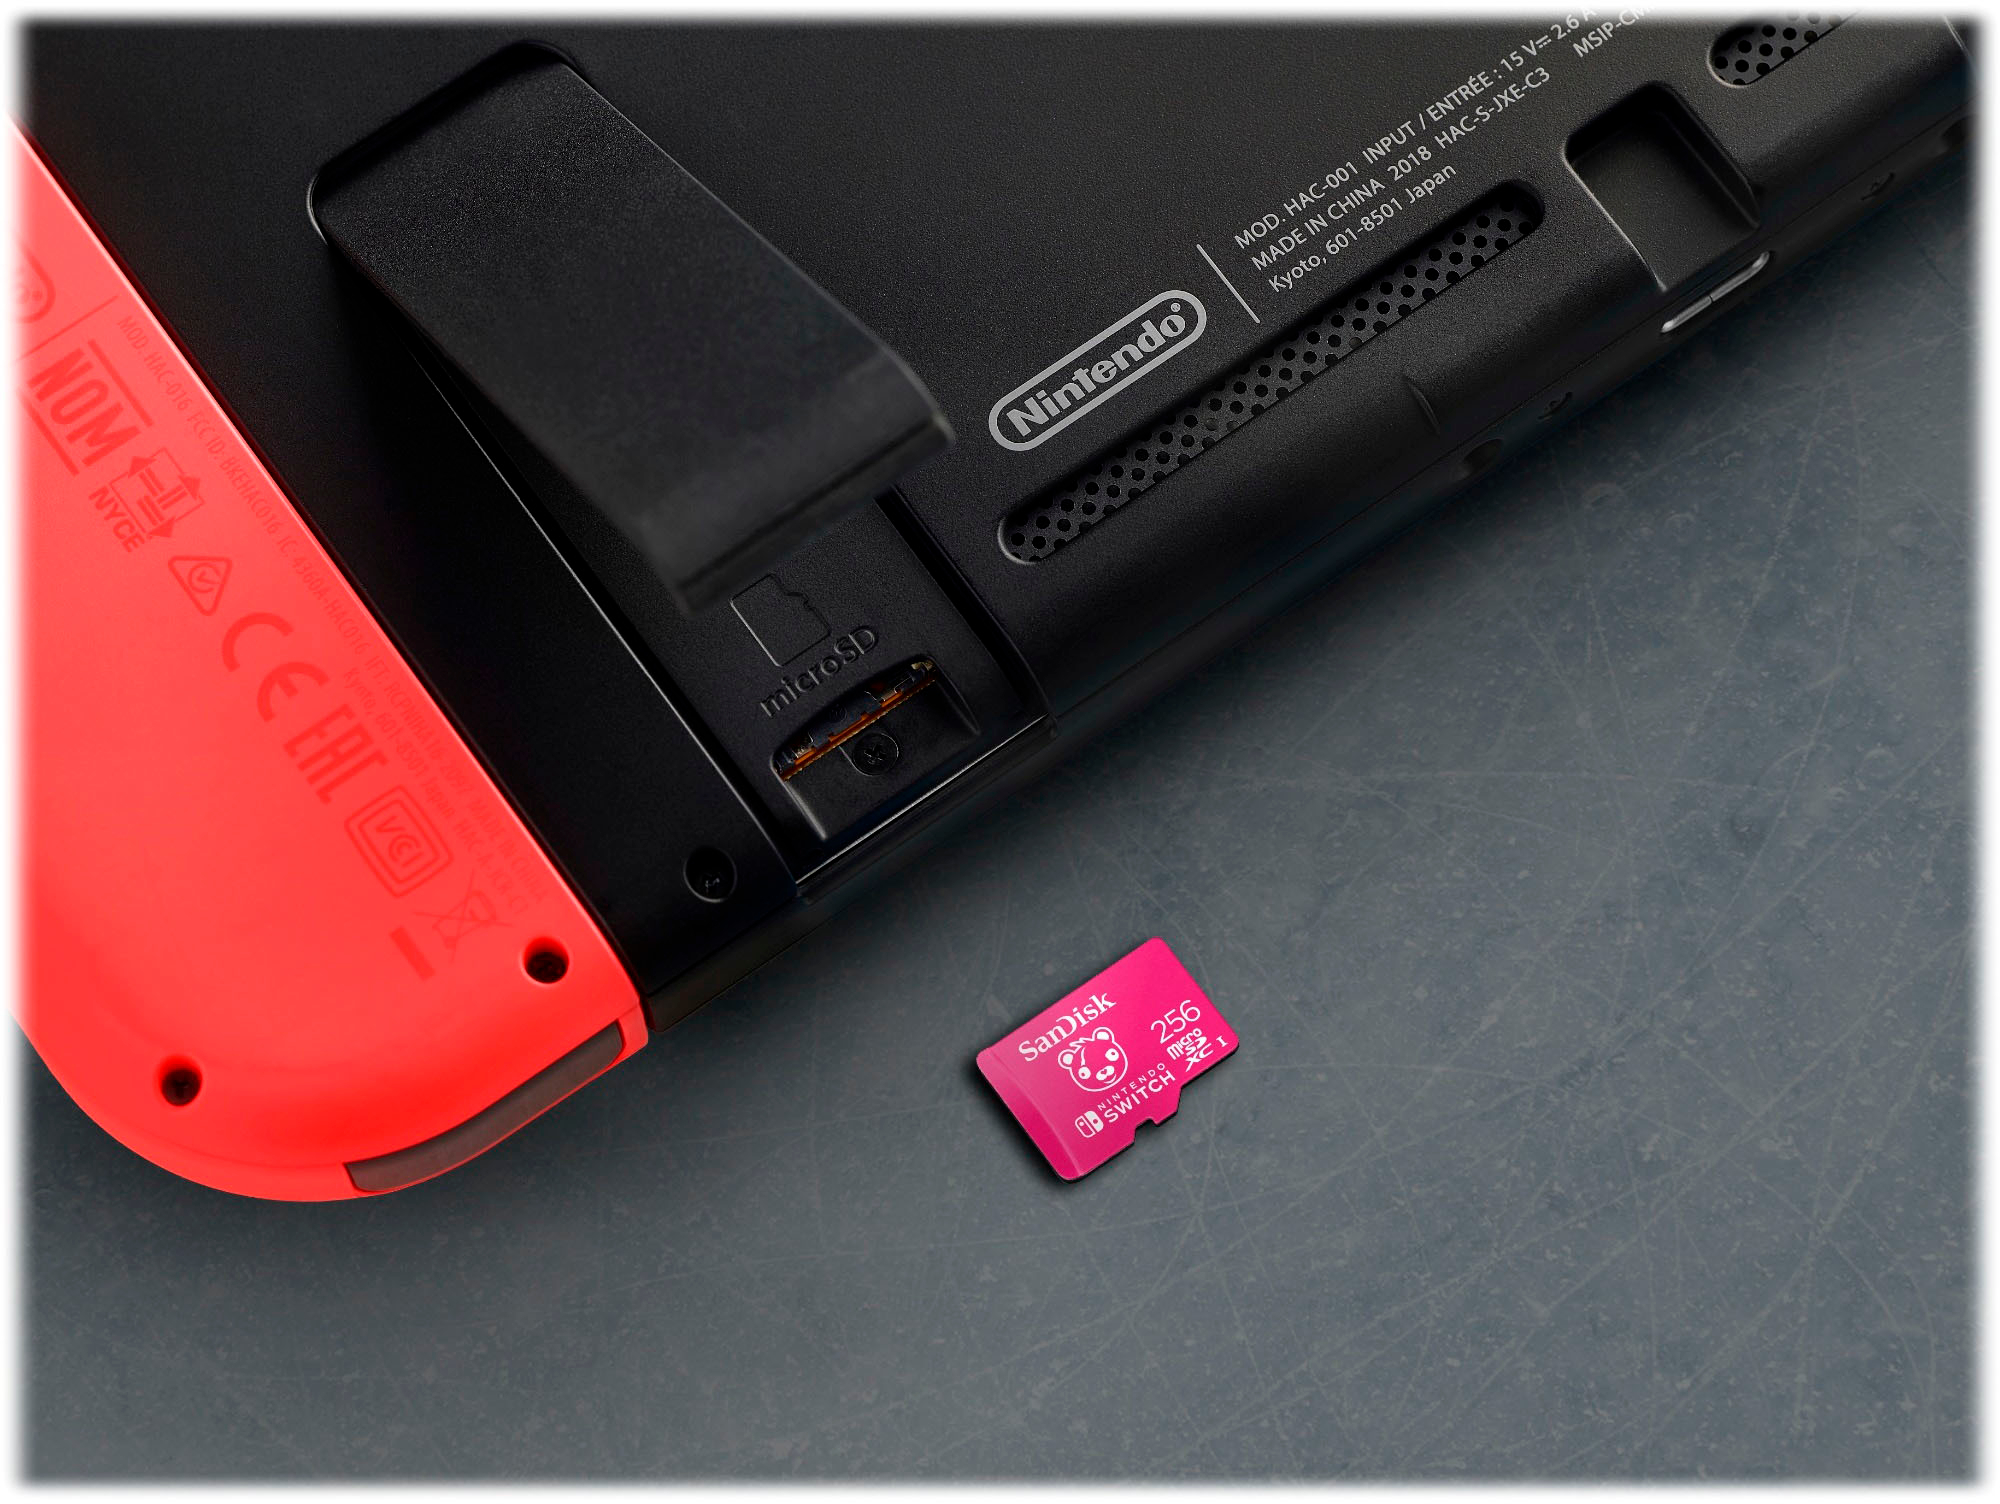 SanDisk 256GB UHS-I microSDXC Memory Card for the Nintendo Switch